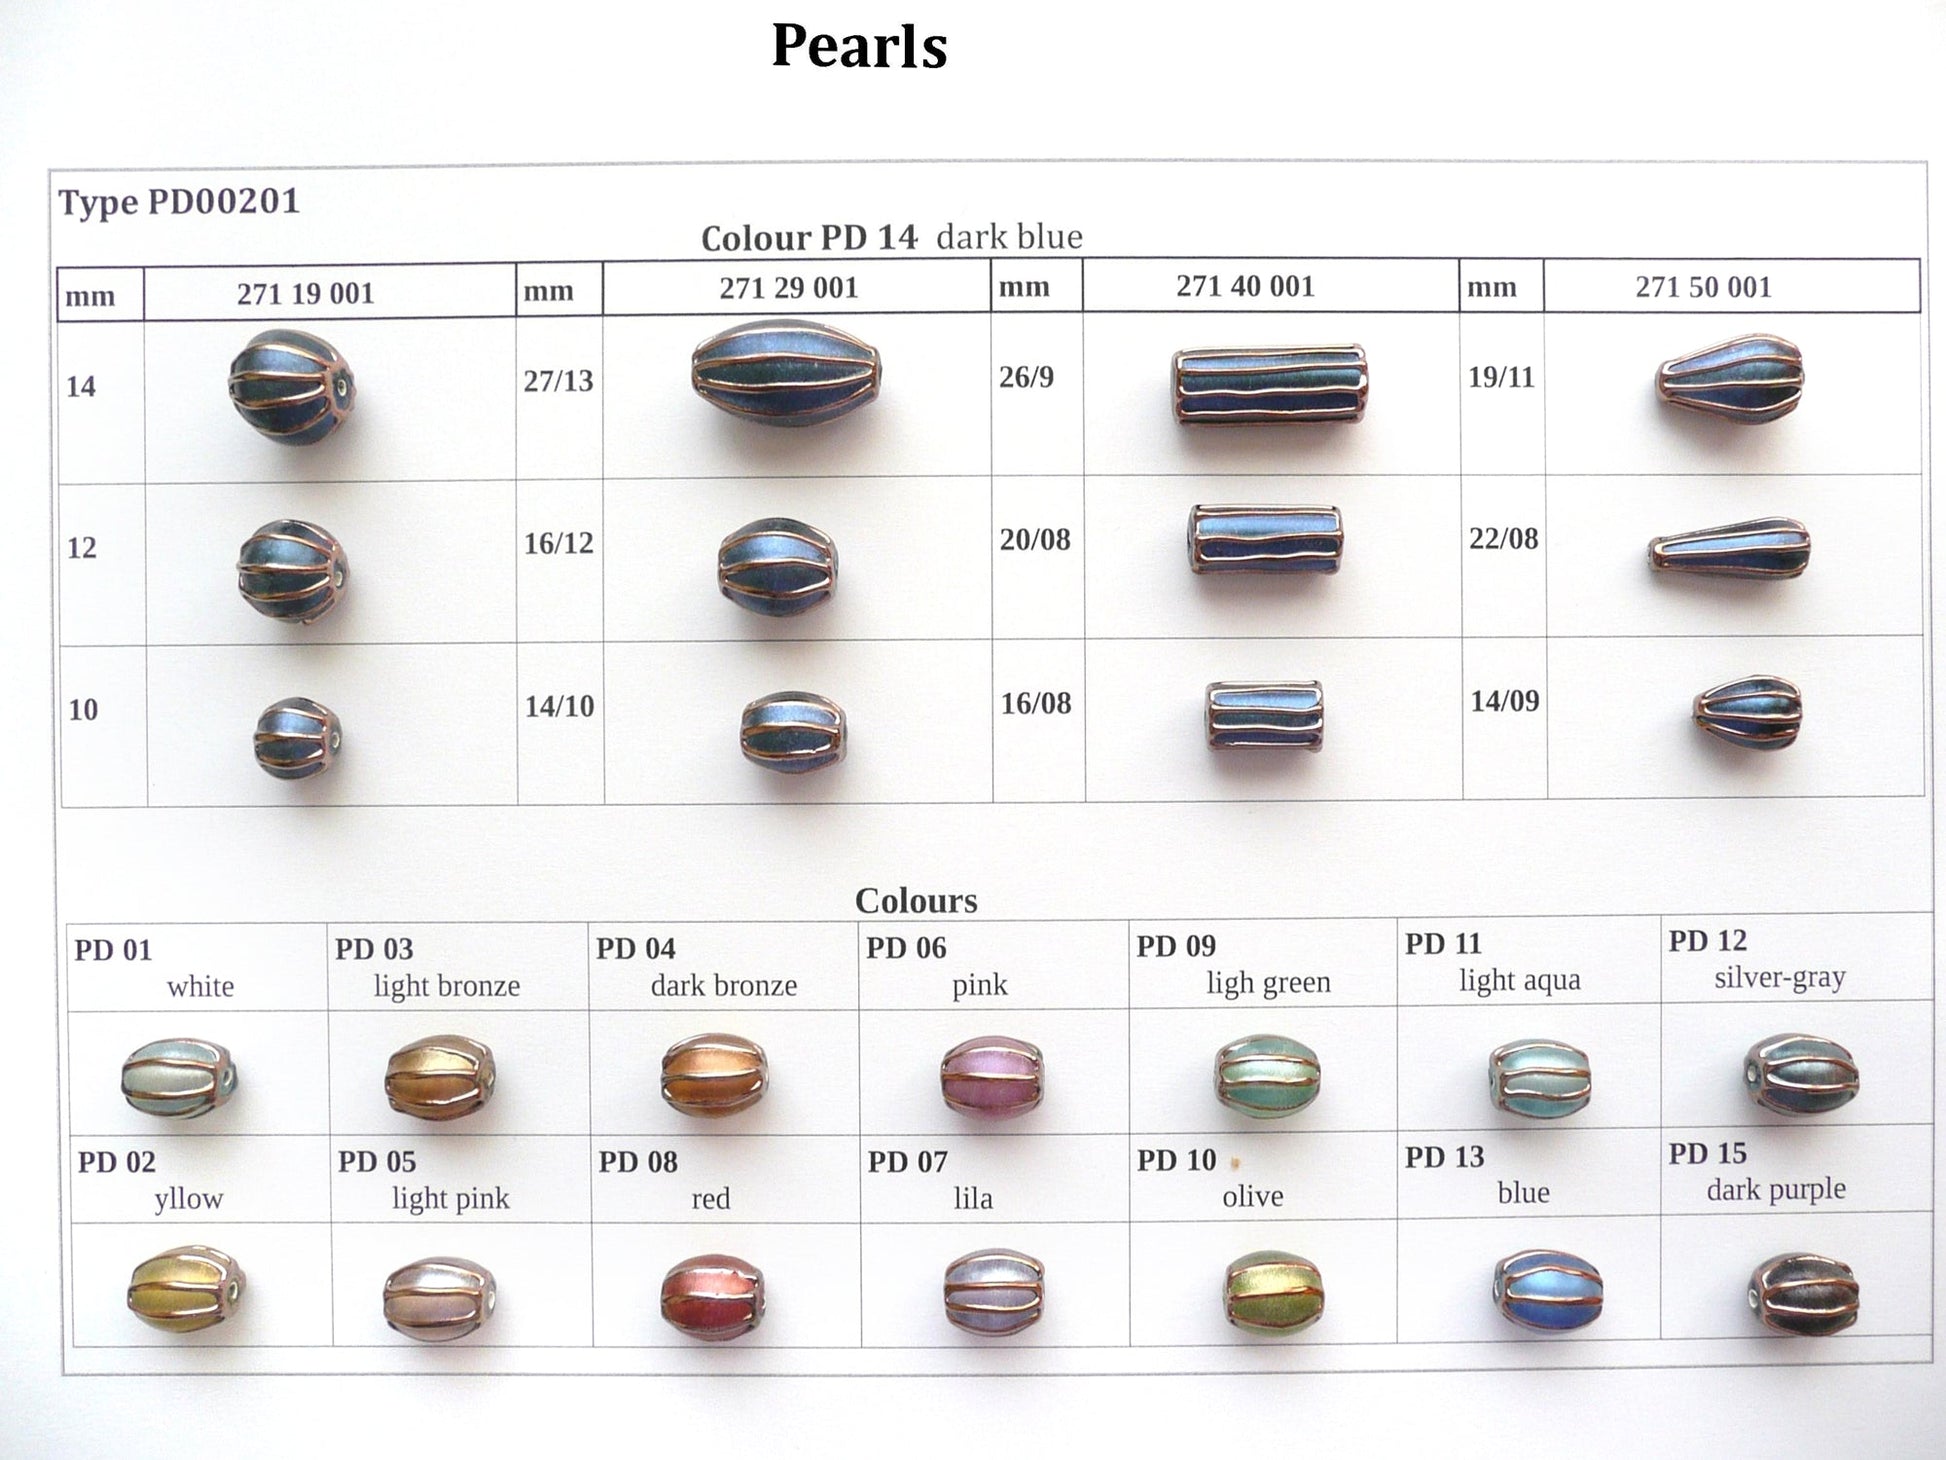 30 pcs Lampwork Beads Pearl Decor PD201 / Oval (271-29-001), Handmade, Preciosa Glass, Czech Republic